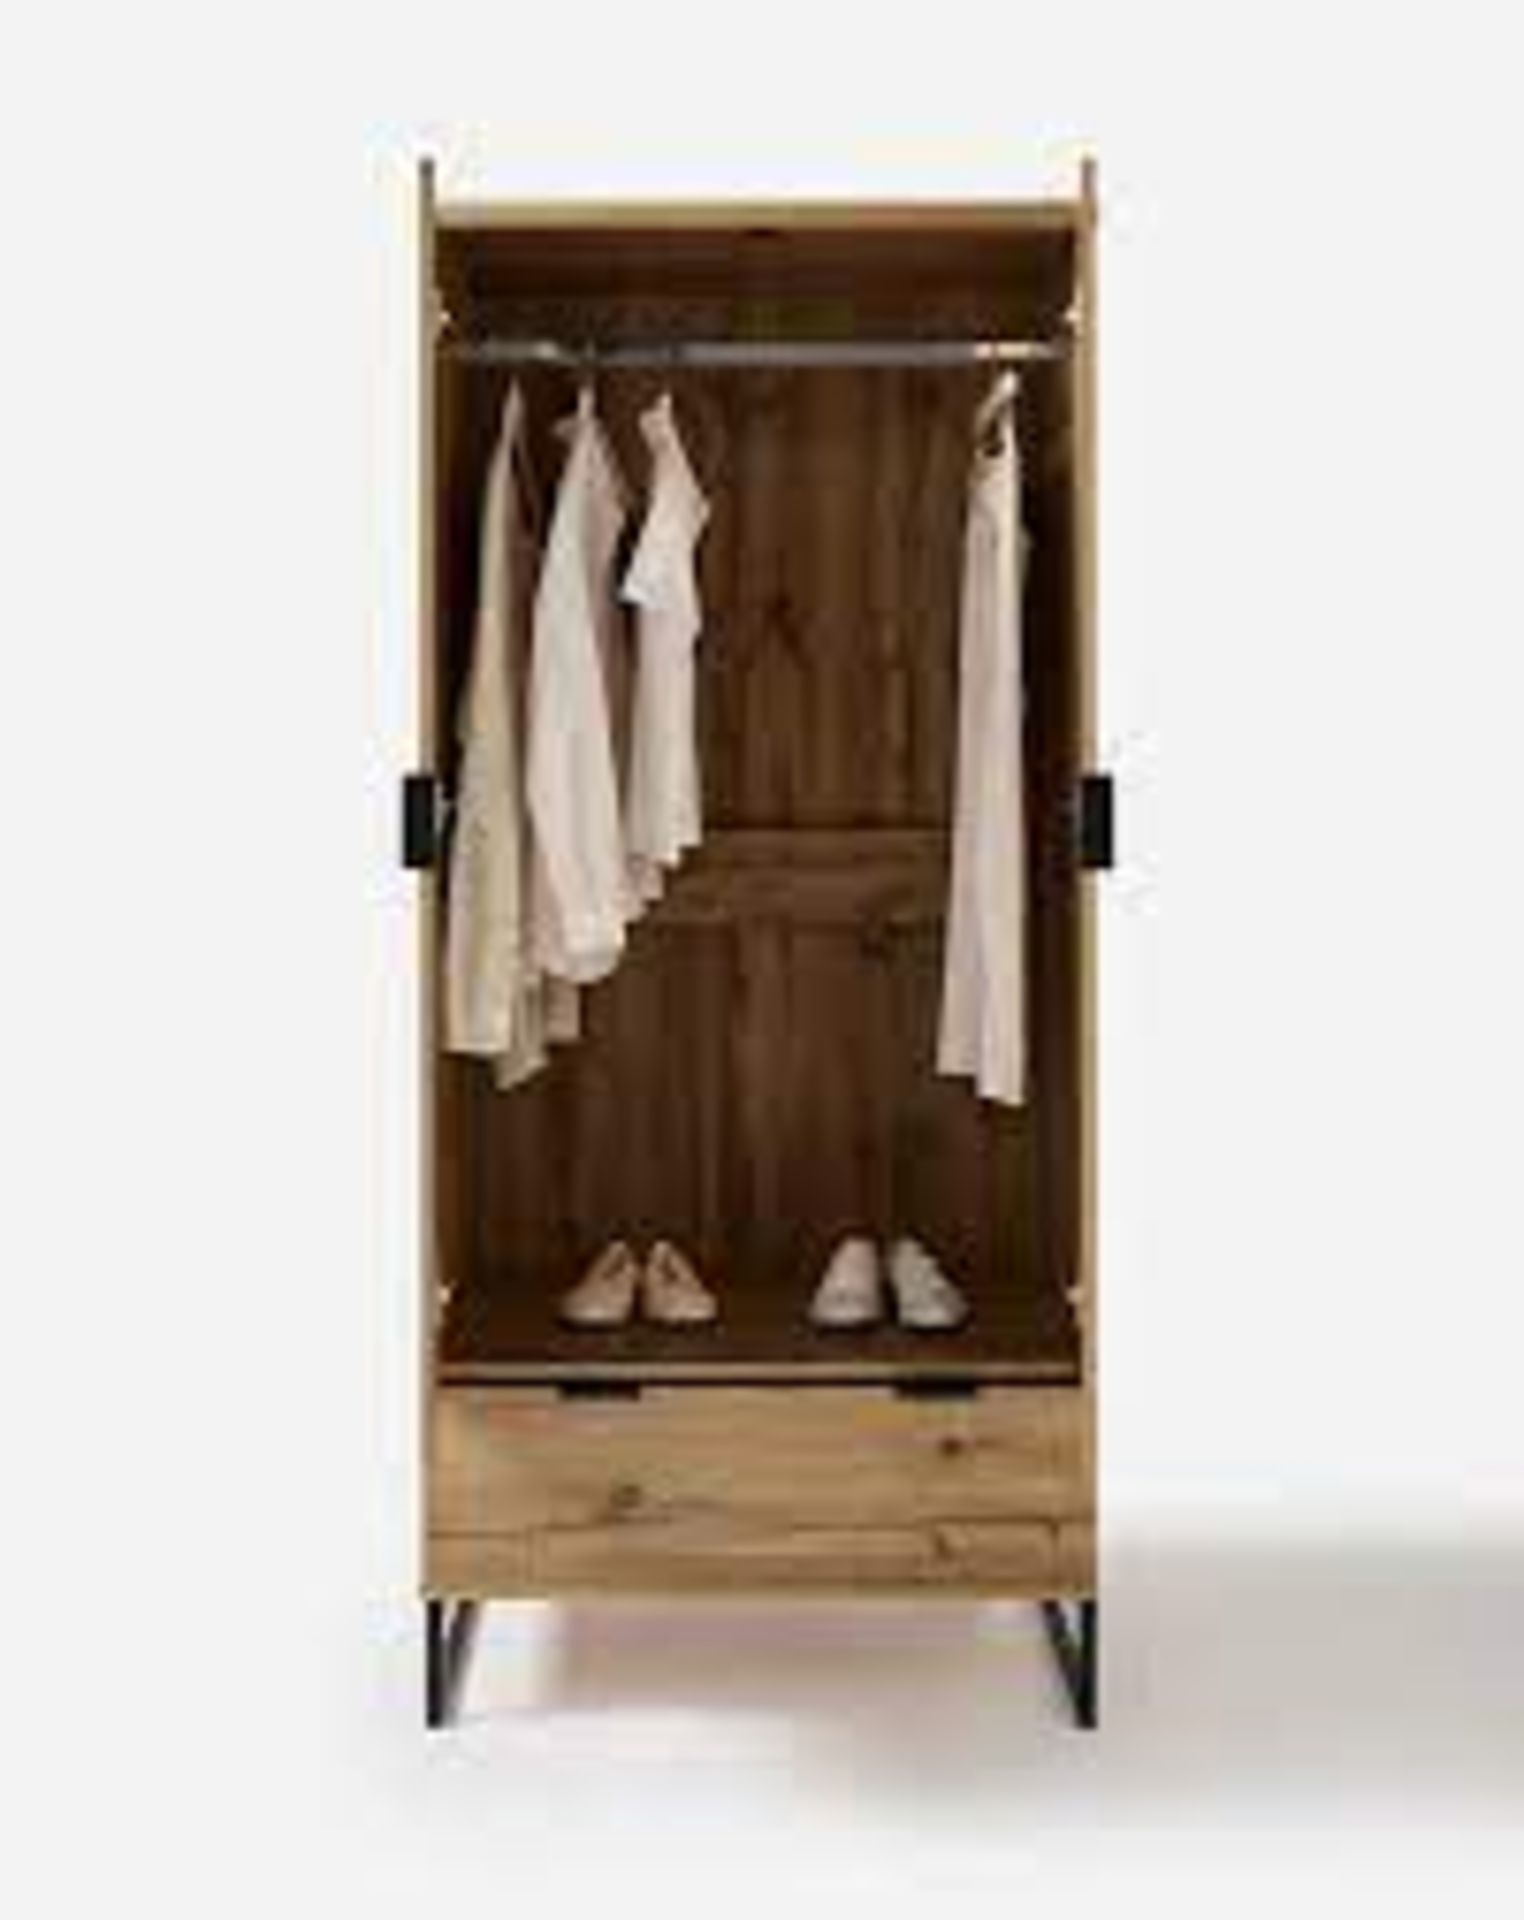 Brand New Oak Shoreditch Wardrobe, The Shoreditch Range has a contemporary and minimalist design, - Image 2 of 2